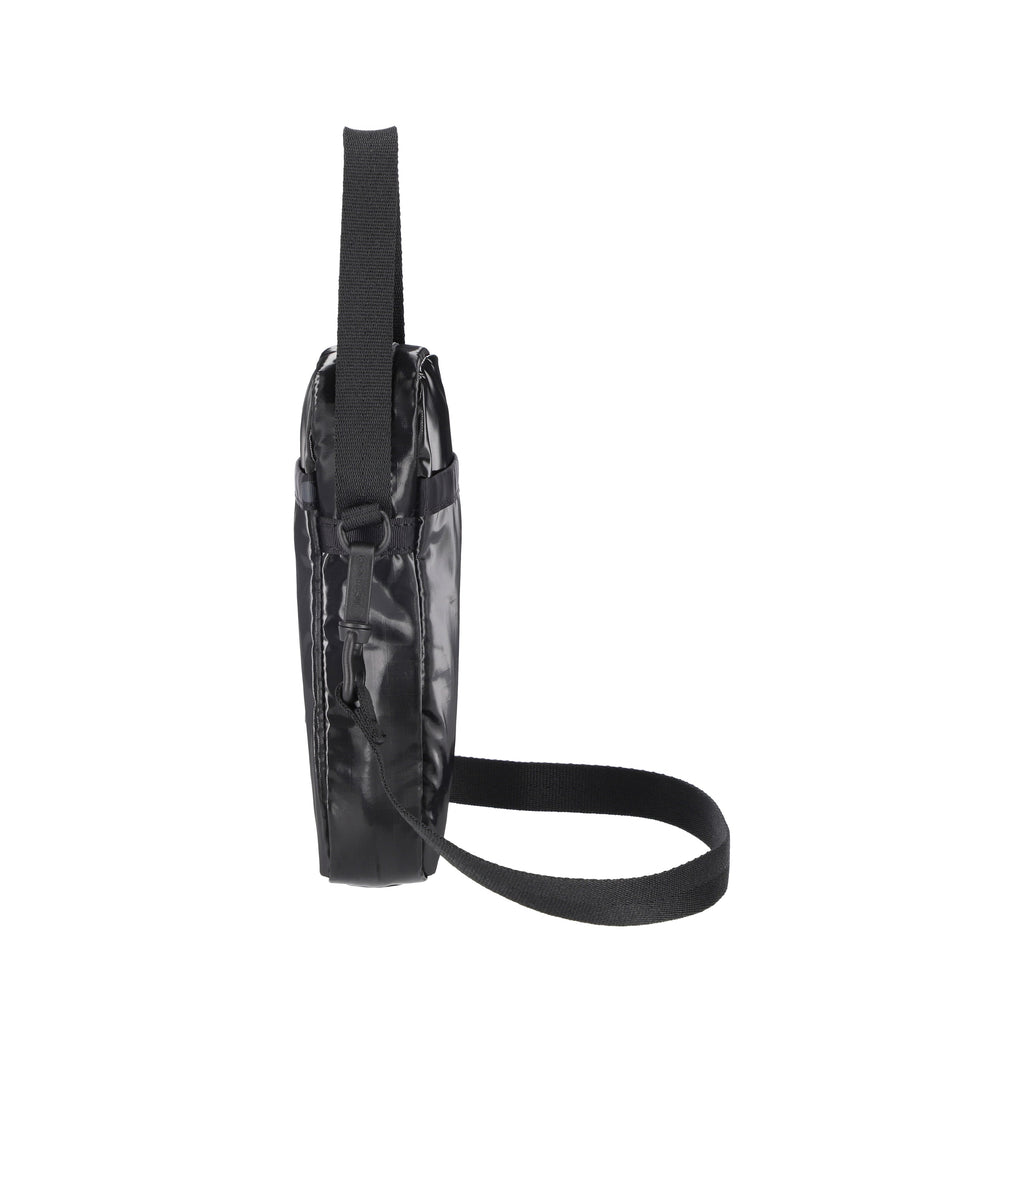 Black LEATHER MEN'S Small Belt Pouch Mini Side bag Vertical Phone Bag